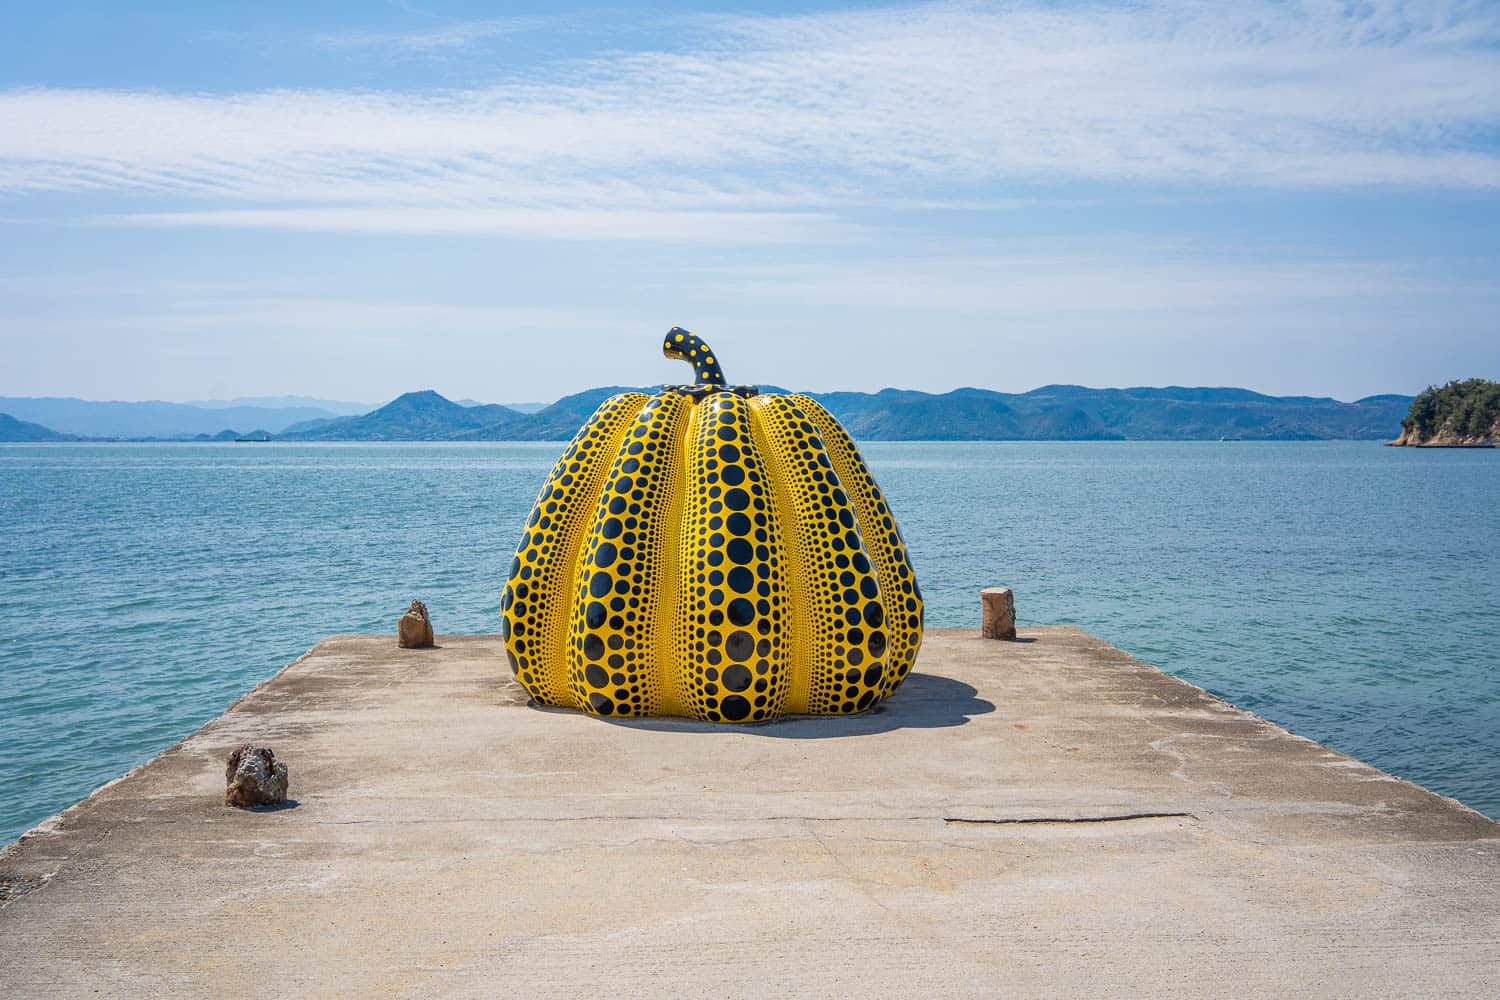 The yellow pumpkin sculpture on Naoshima Art Island in Japan